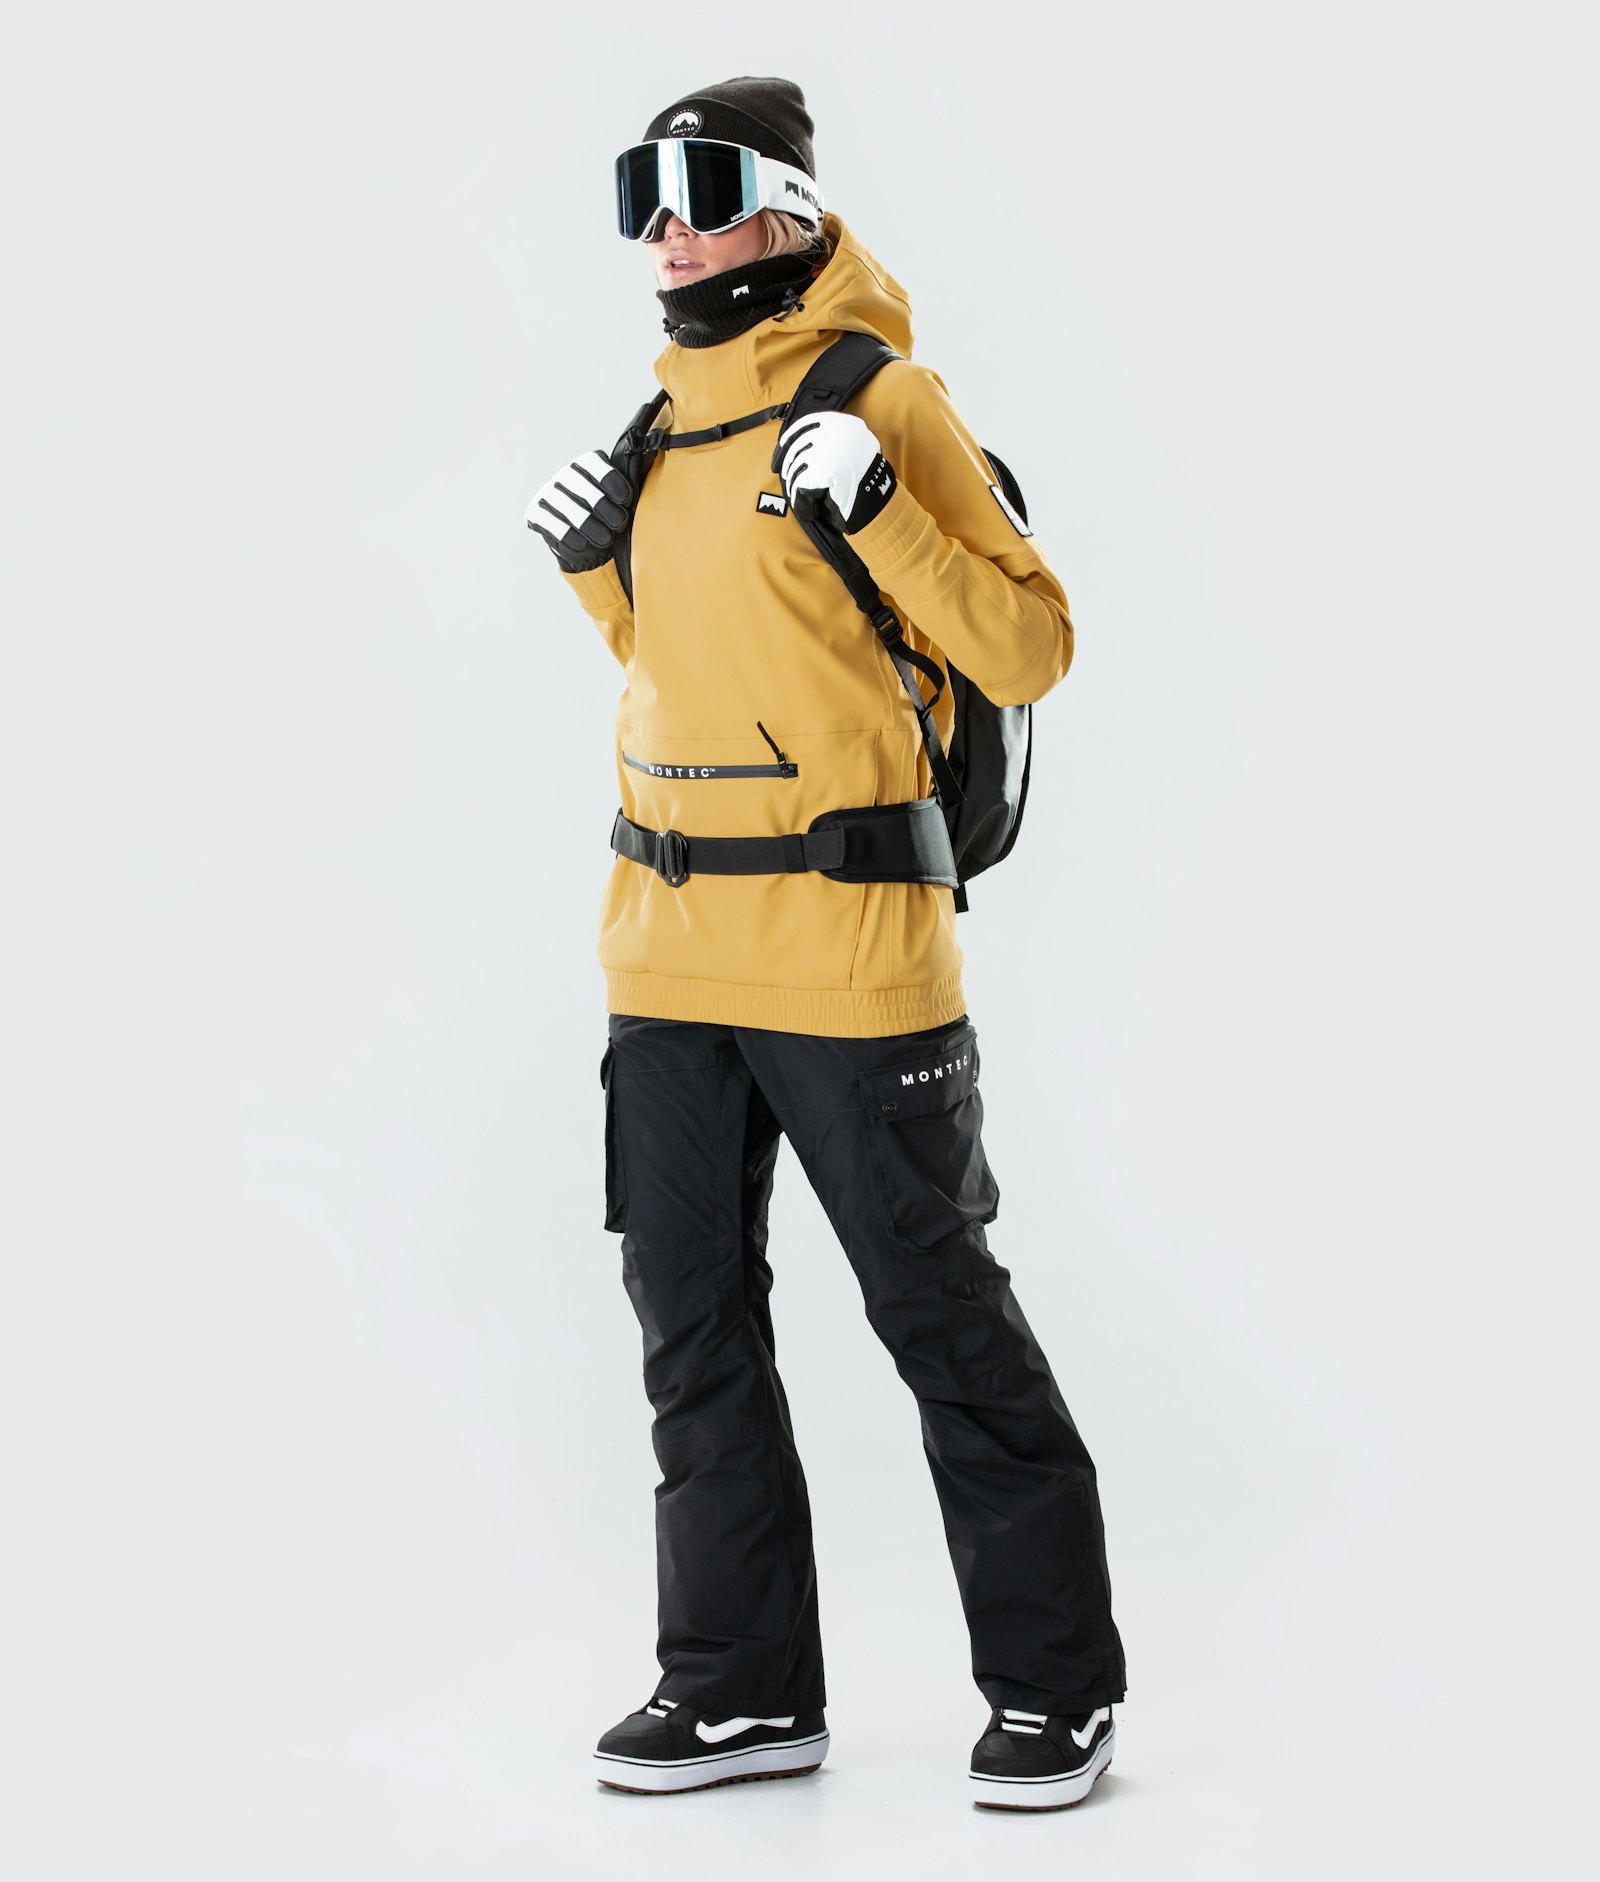 Tempest W 2020 Snowboardjacke Damen Yellow